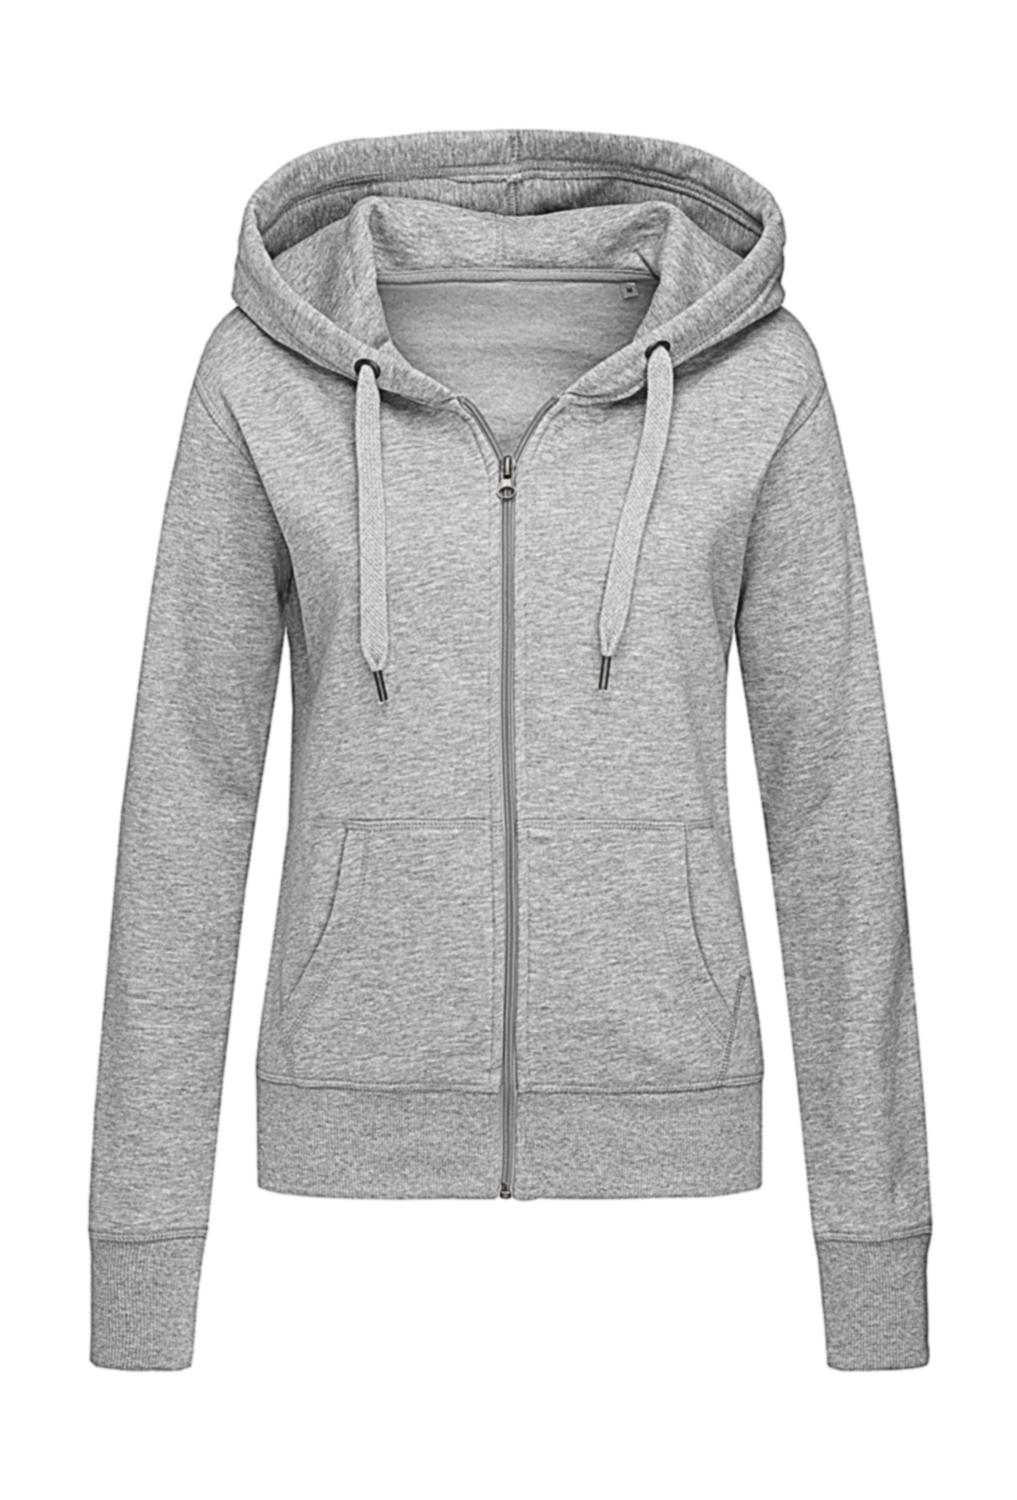  Sweat Jacket Select Women in Farbe Grey Heather